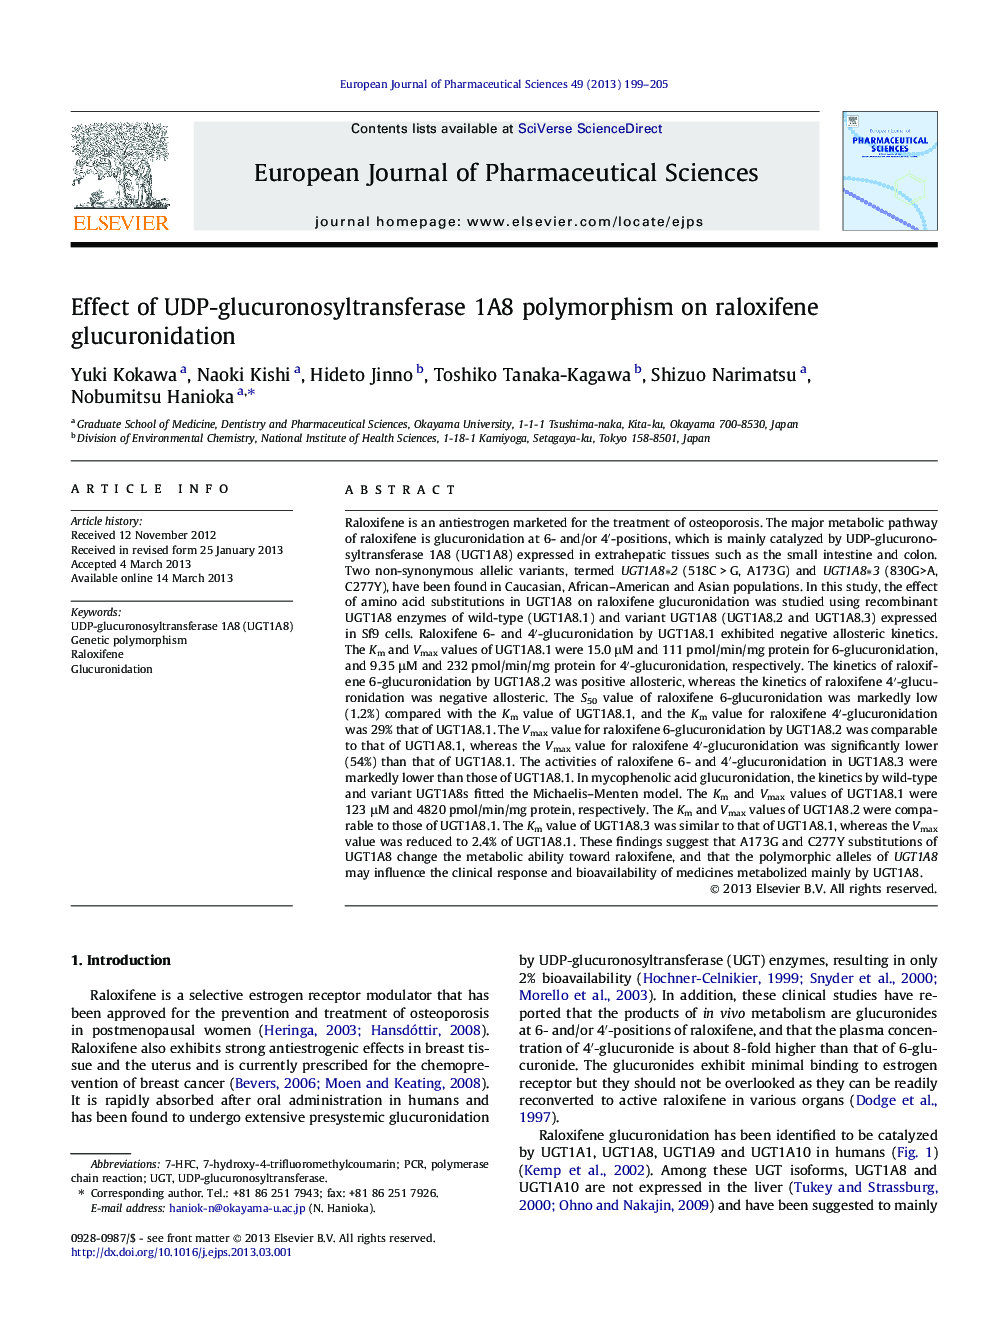 Effect of UDP-glucuronosyltransferase 1A8 polymorphism on raloxifene glucuronidation